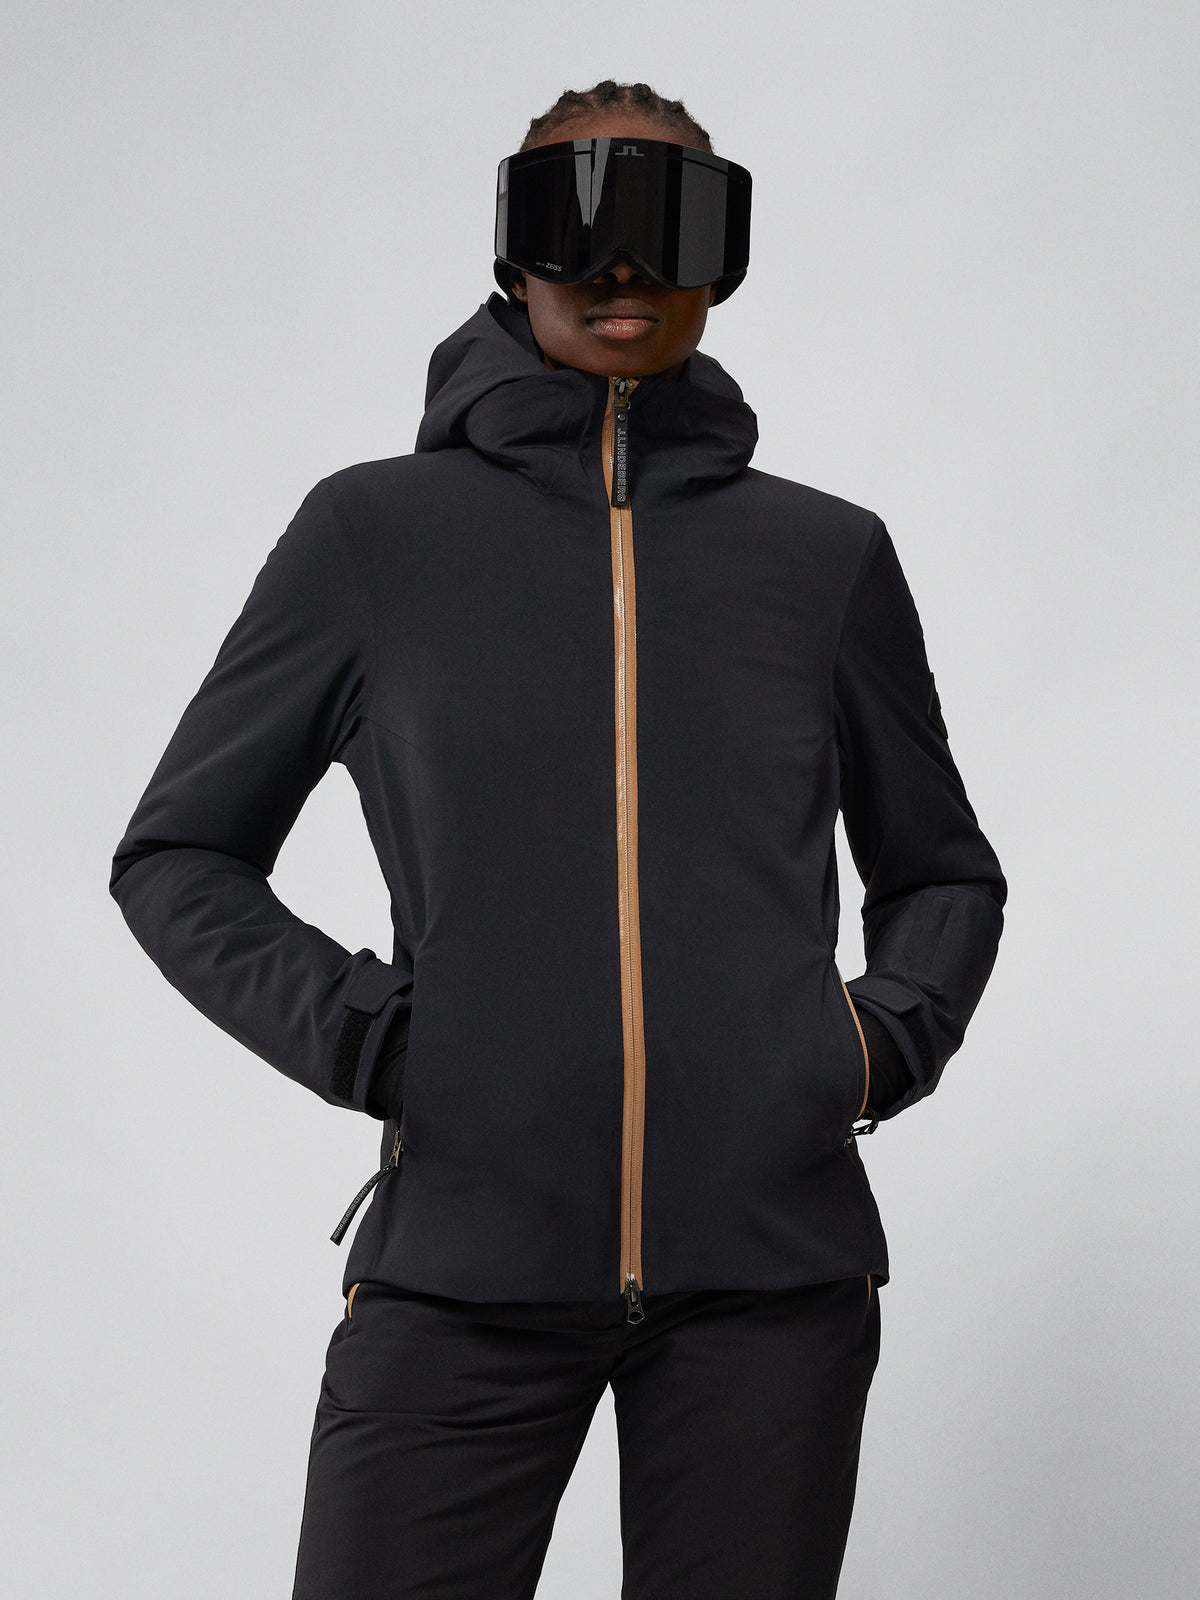 Fendi Ski Jacket Black Size Medium